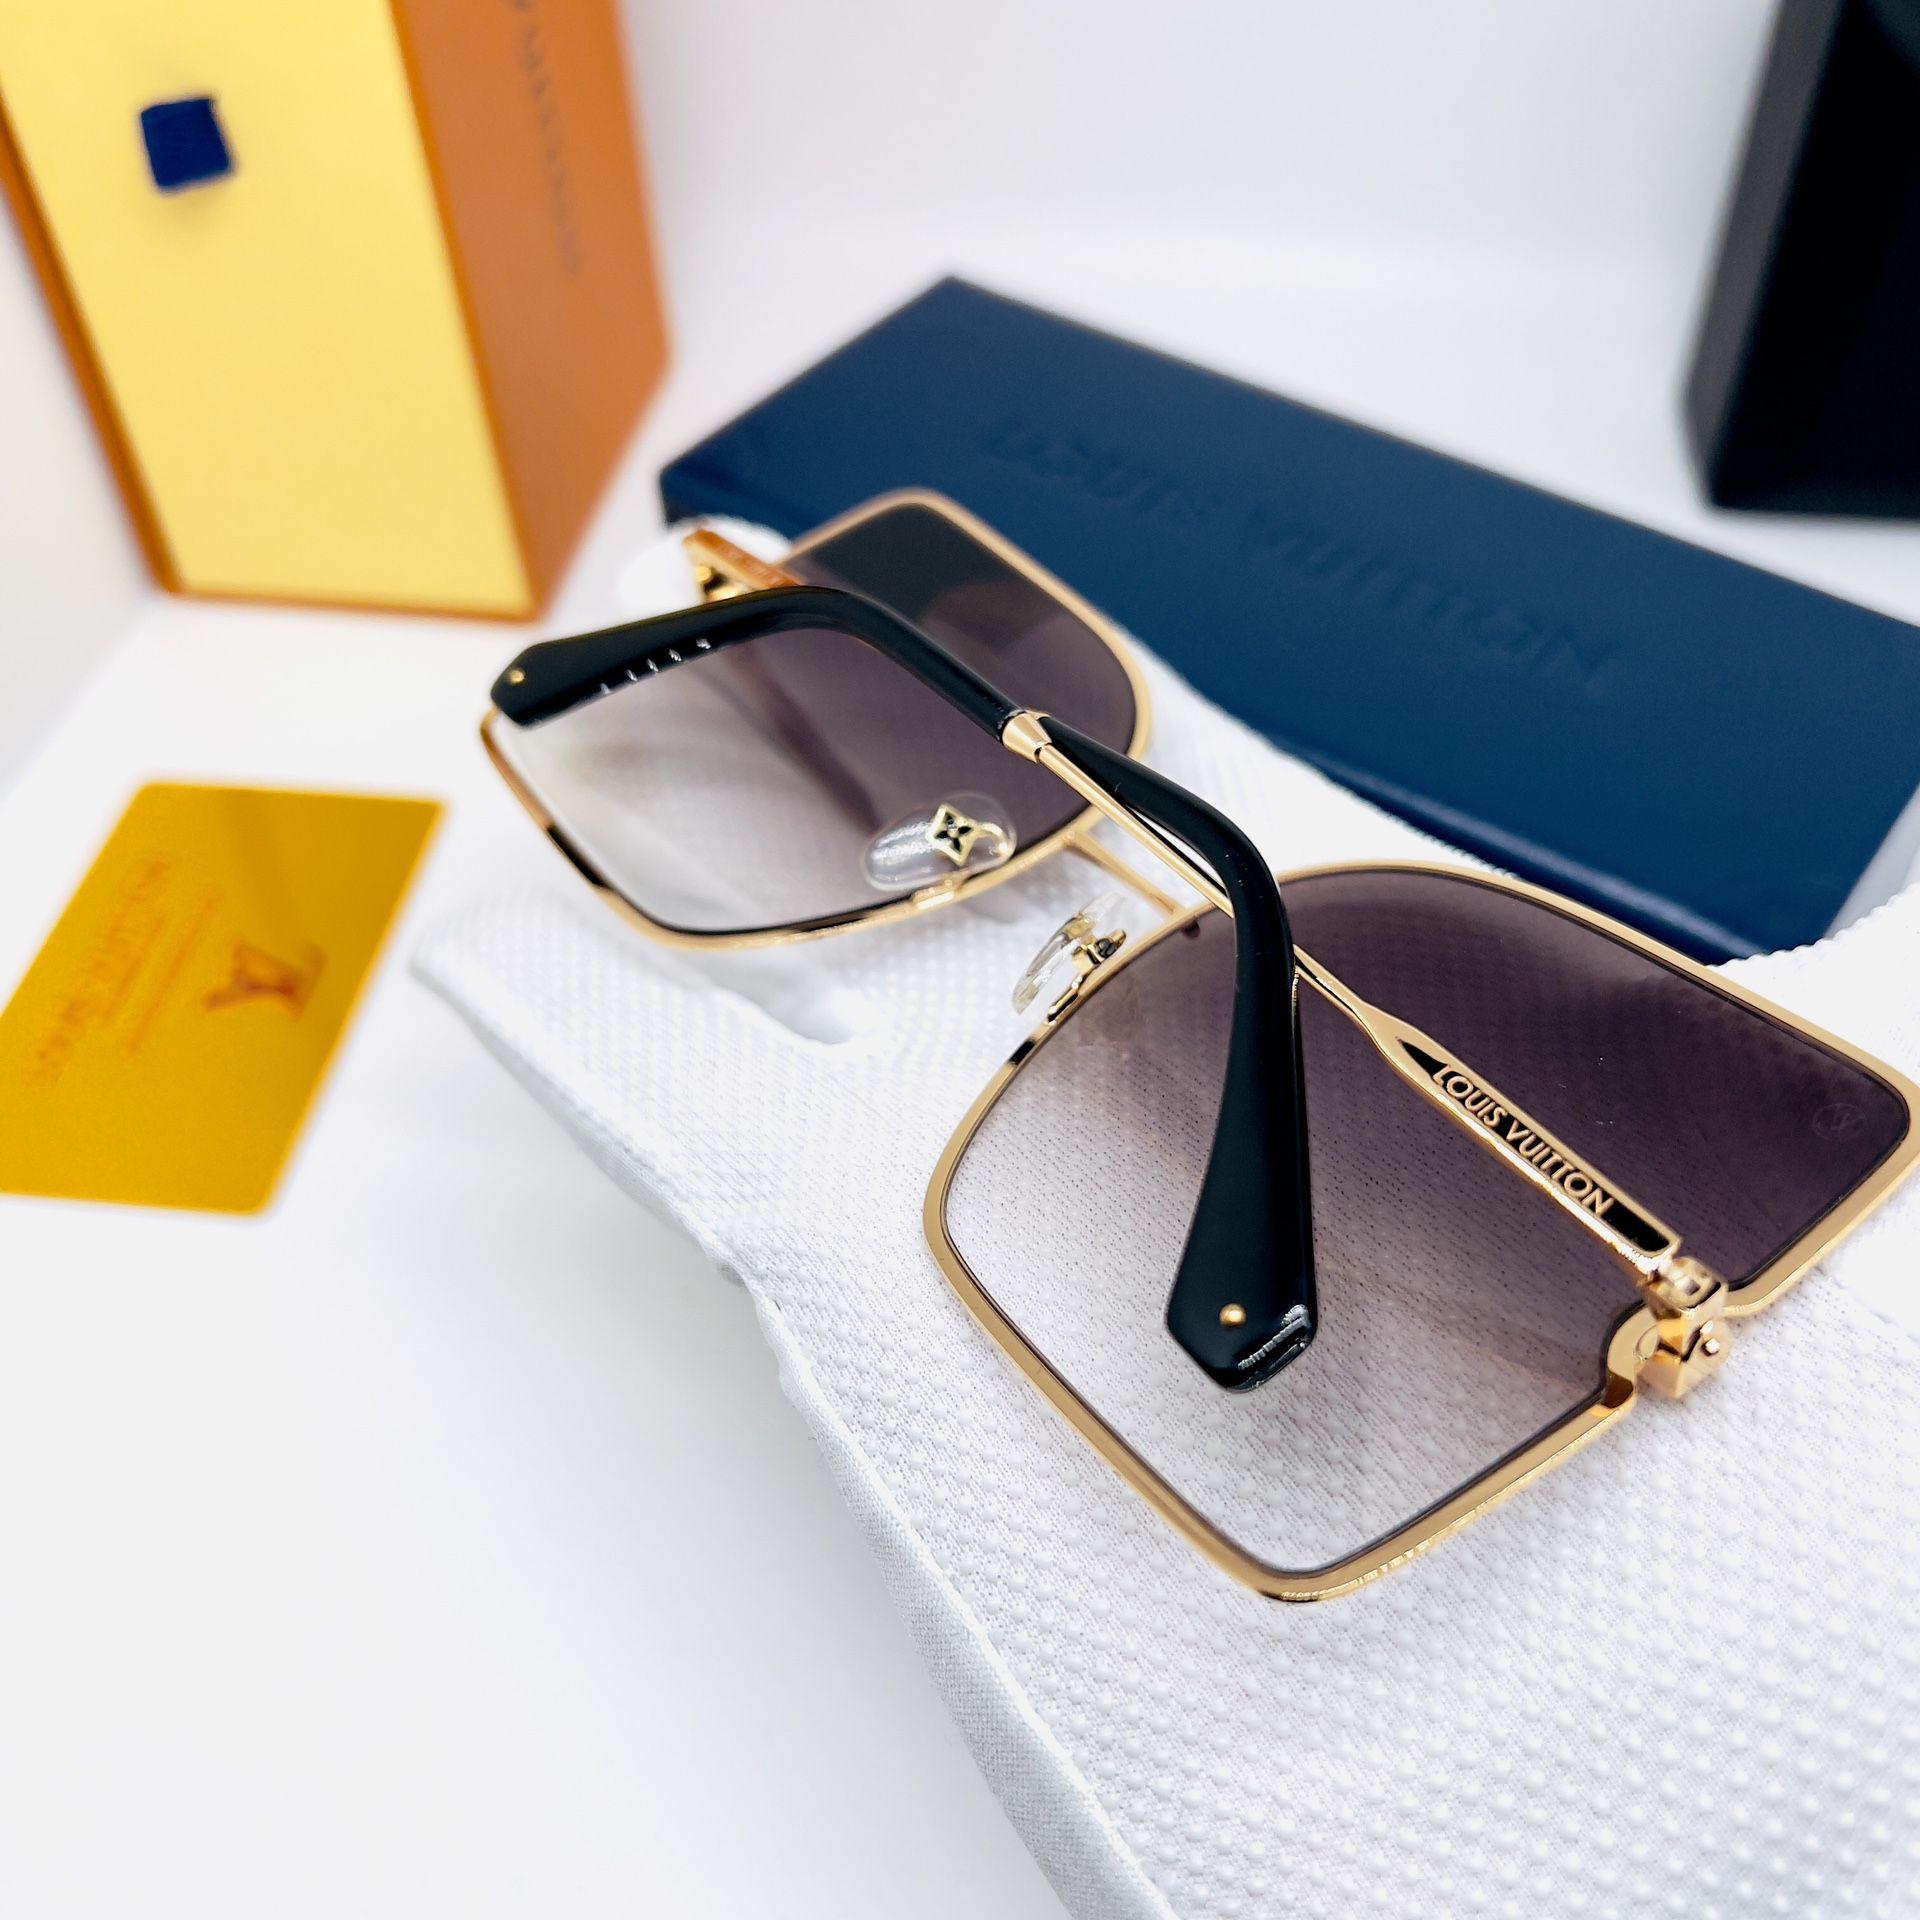 Louis Vuitton Sunglasses for Sale in Orlando, FL - OfferUp